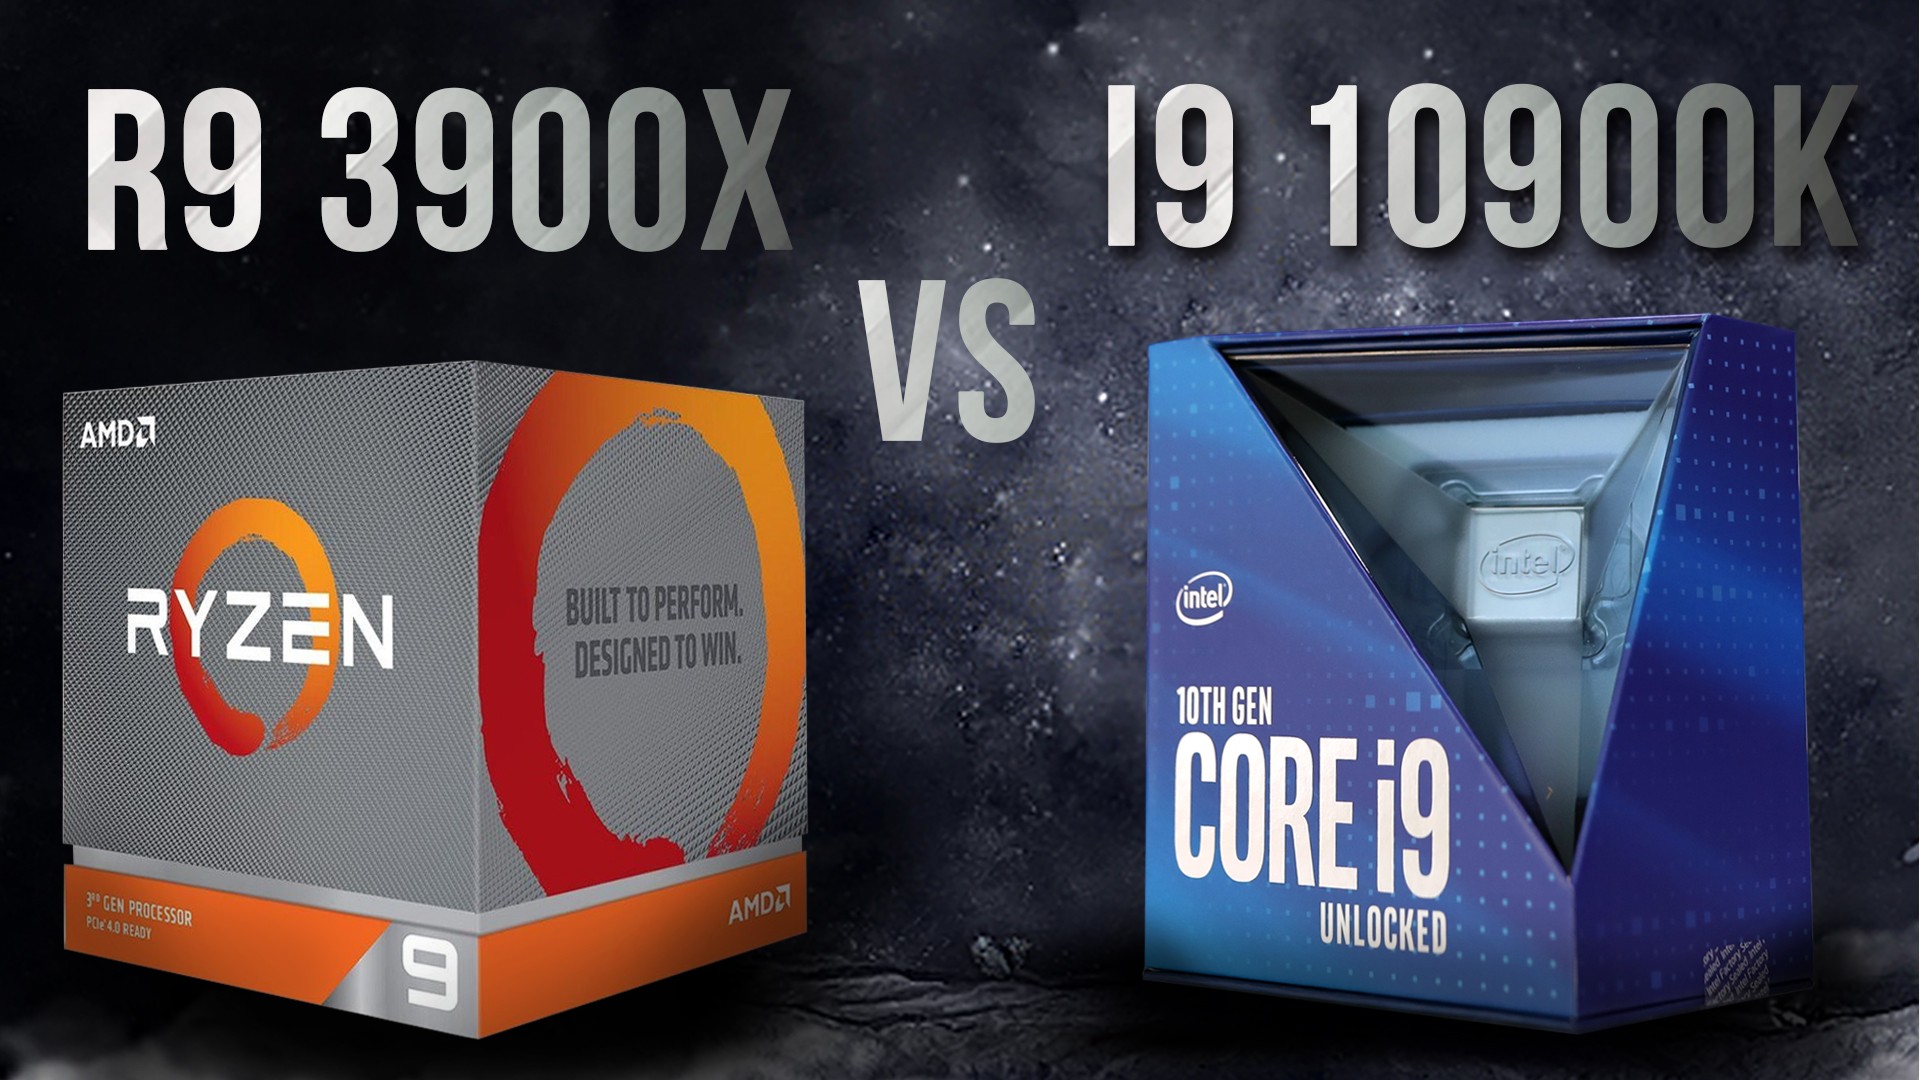 Intel i9 10900k vs AMD Ryzen 9 3900x - Test so sánh render corona 3dsmax